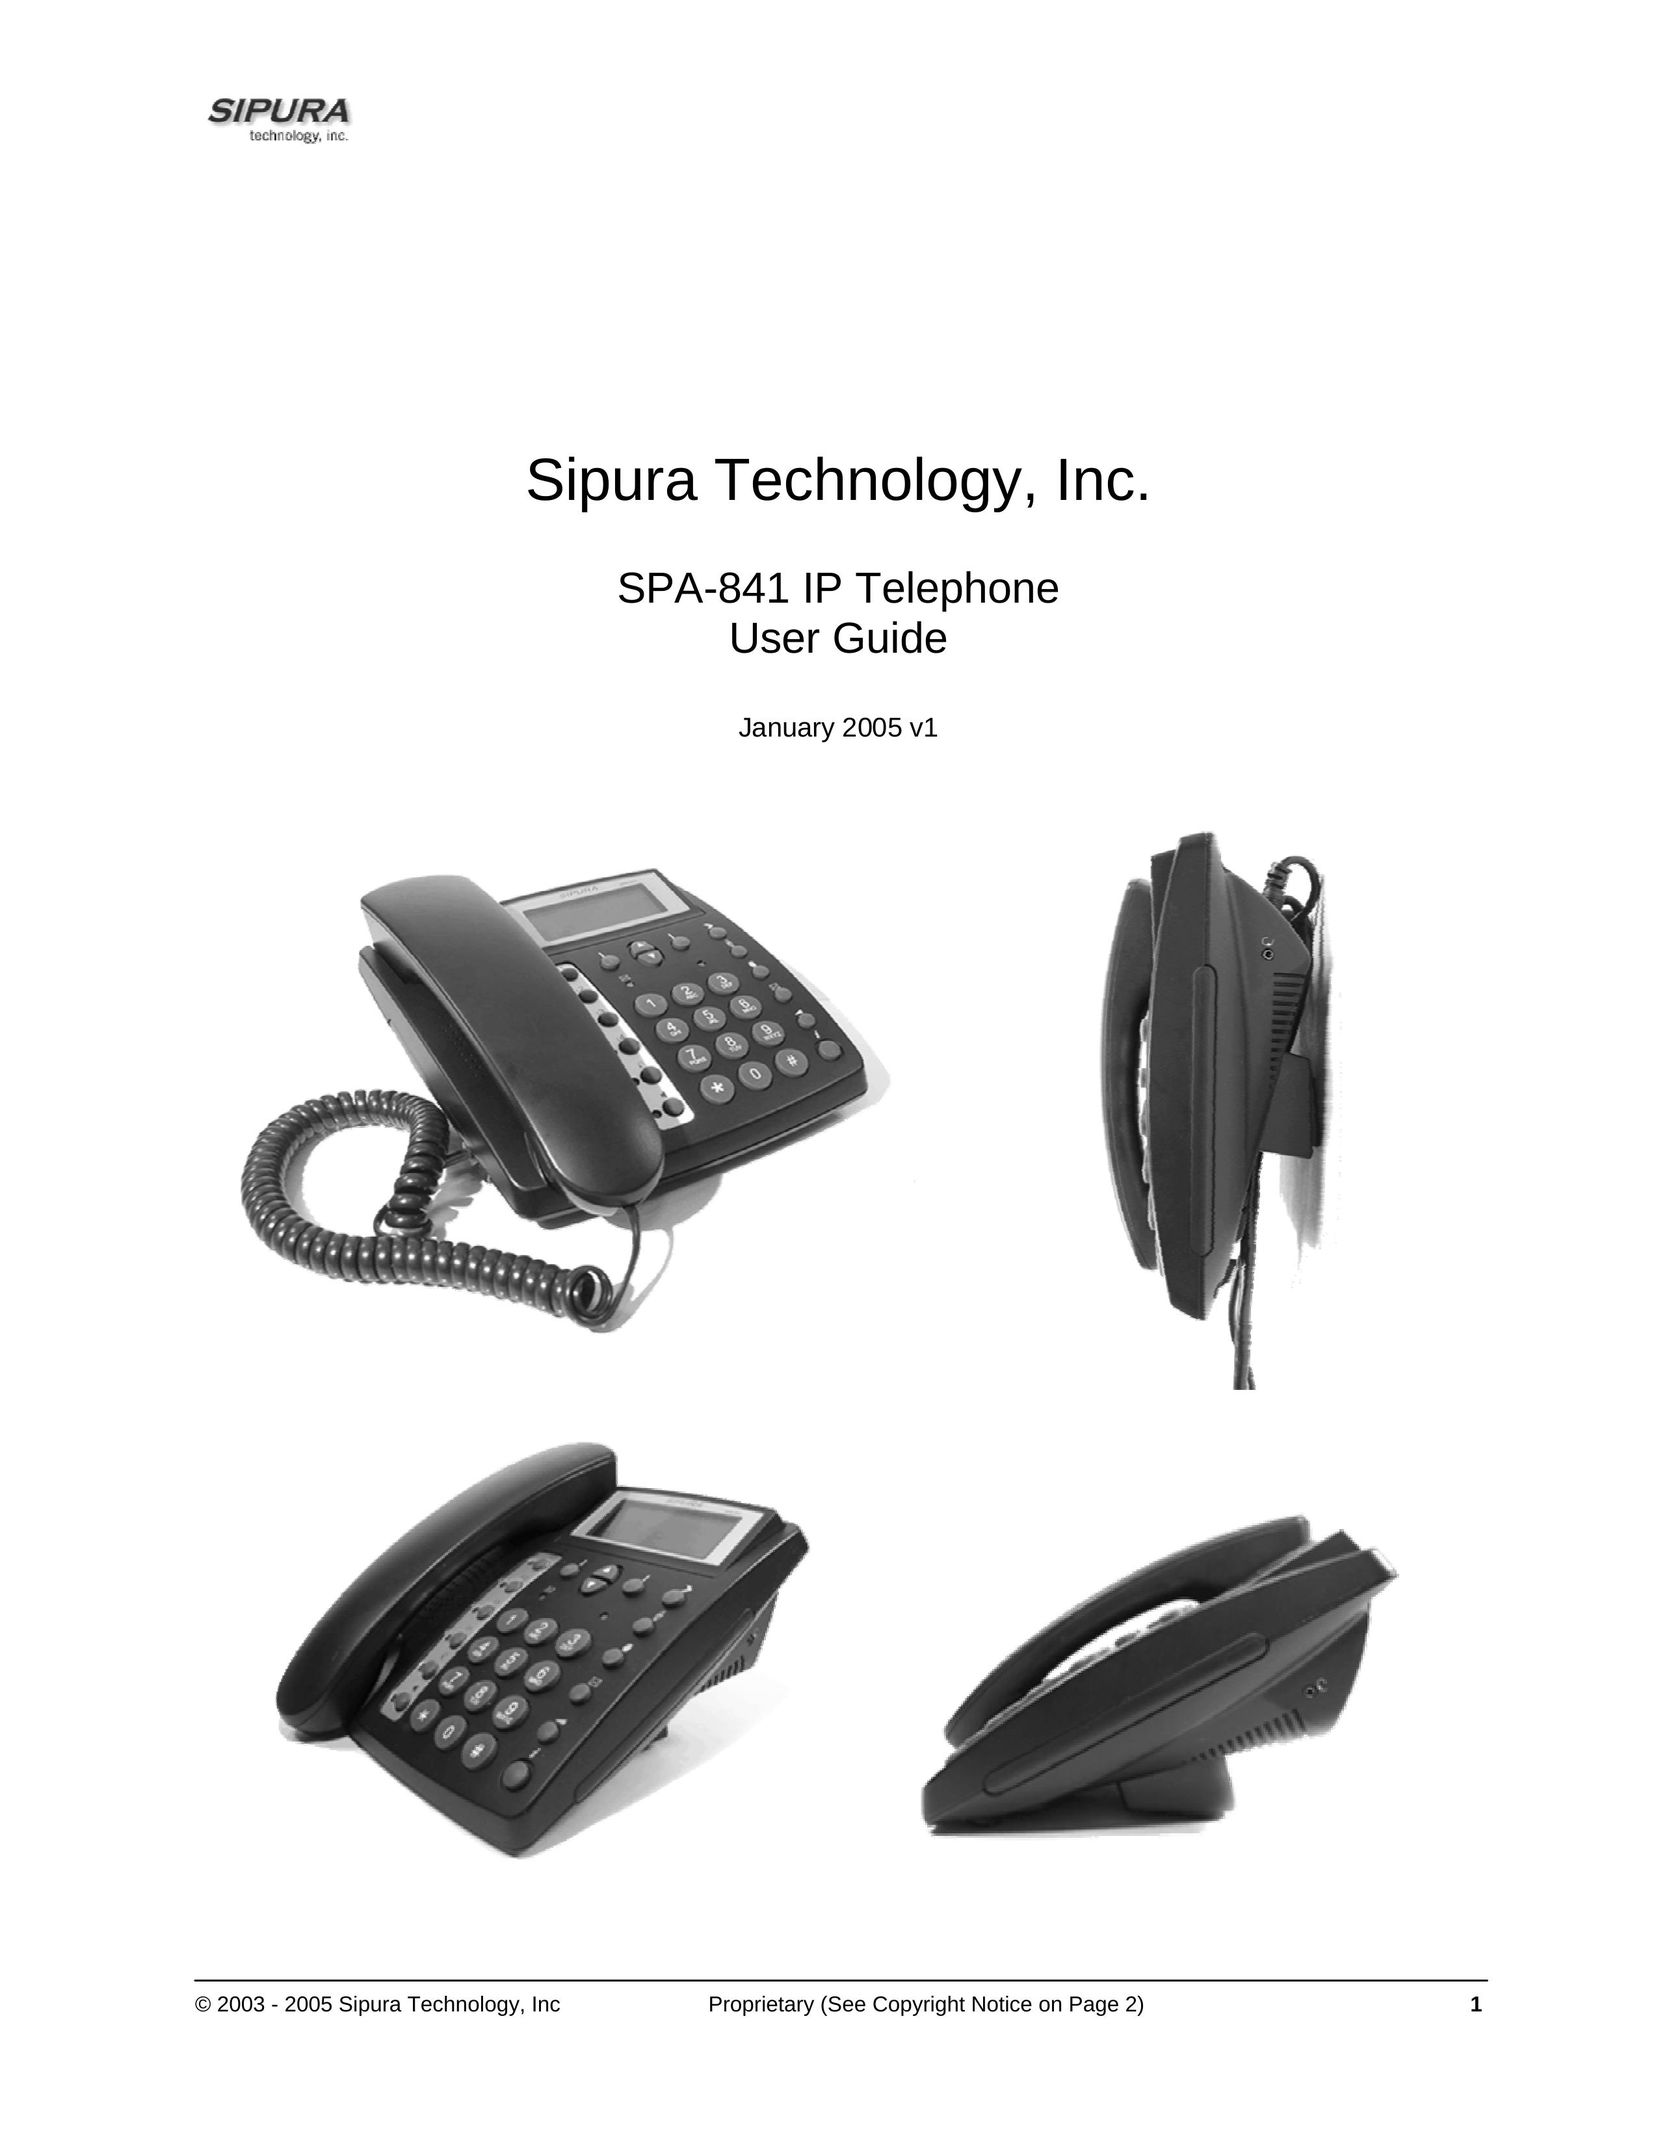 Sipura Technology SPA-841 Telephone User Manual